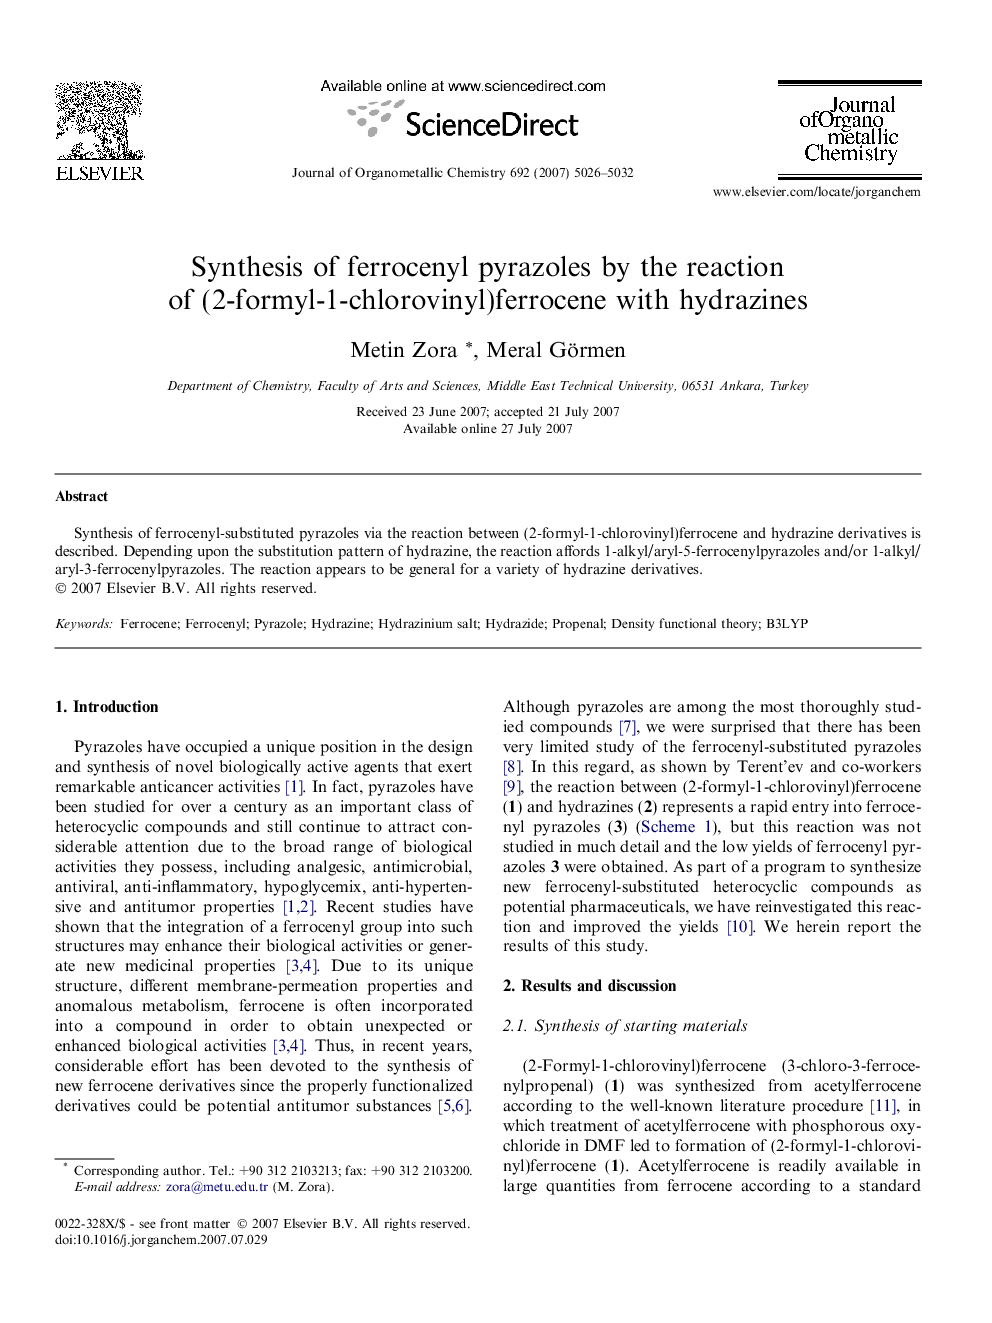 Synthesis of ferrocenyl pyrazoles by the reaction of (2-formyl-1-chlorovinyl)ferrocene with hydrazines